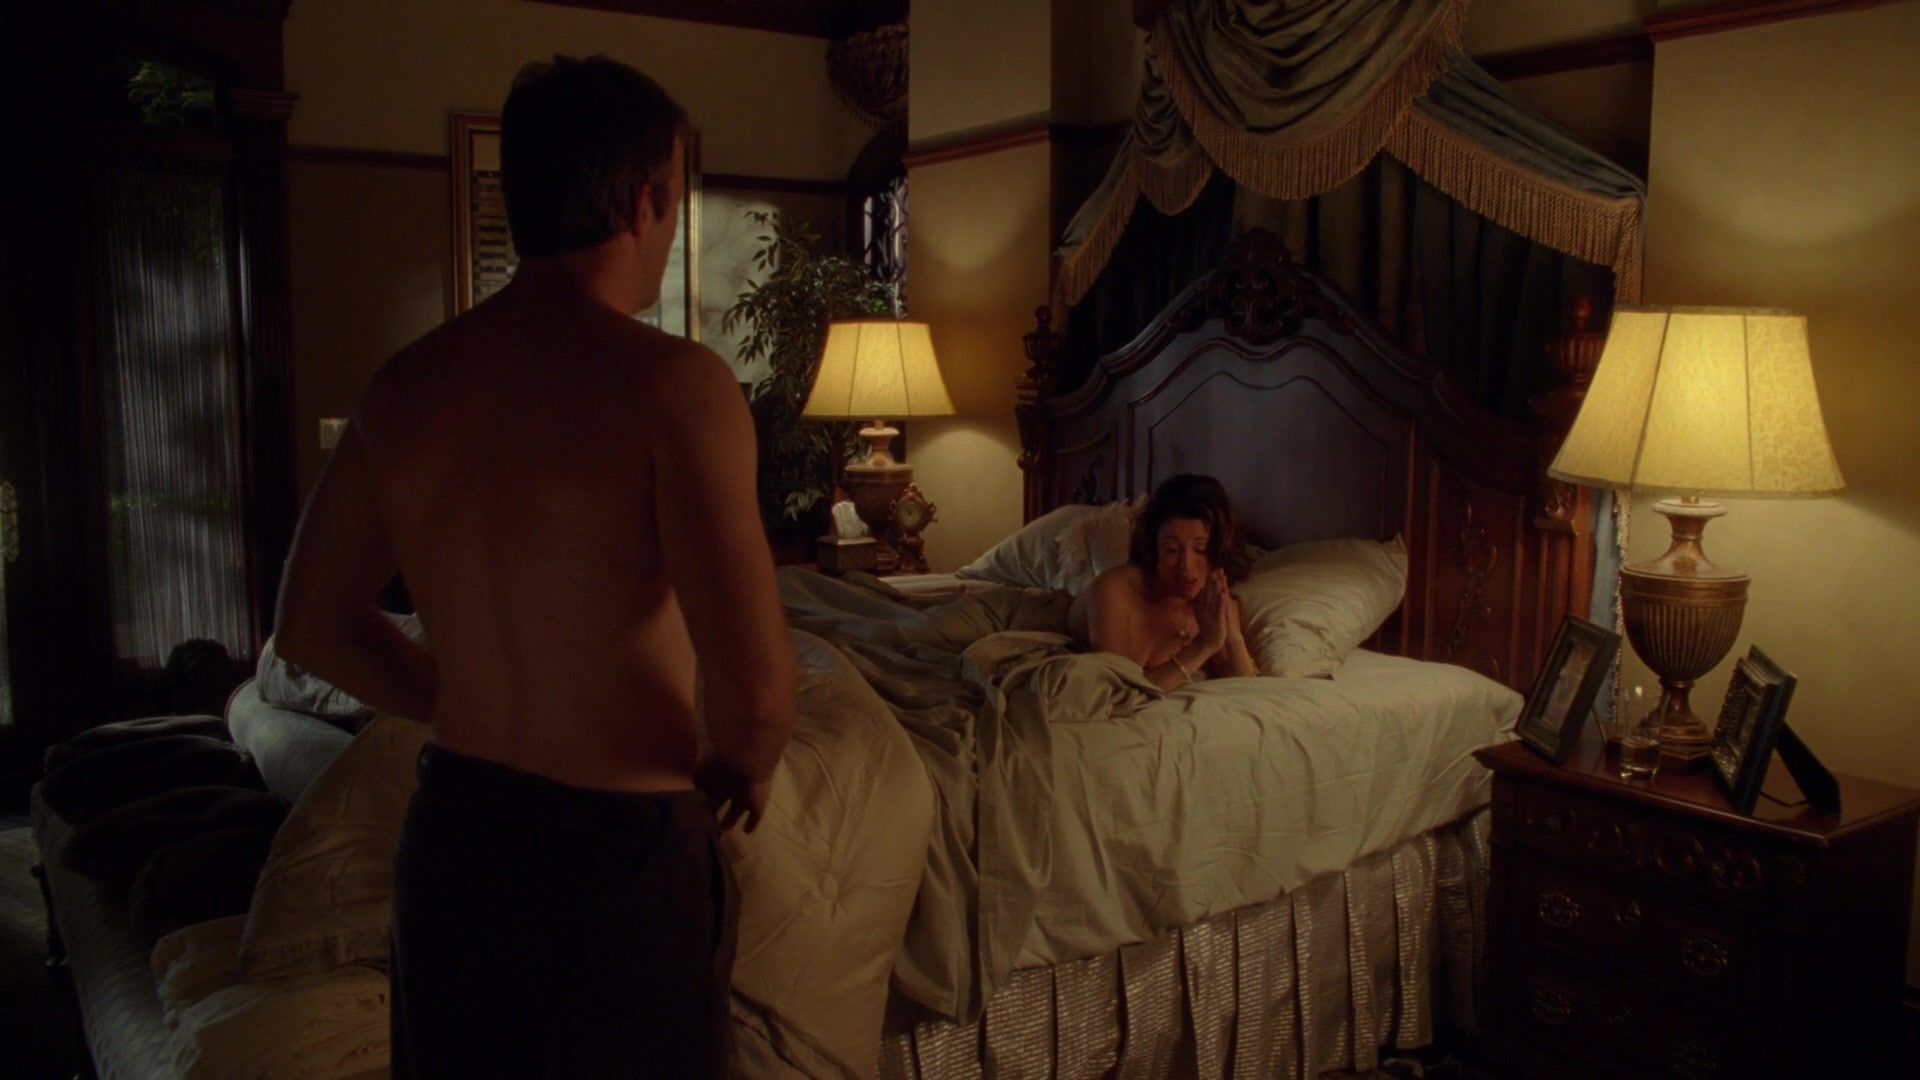 Housewife Topless Cowgirl Celebs Scene|TV movie "Hung" Bareback